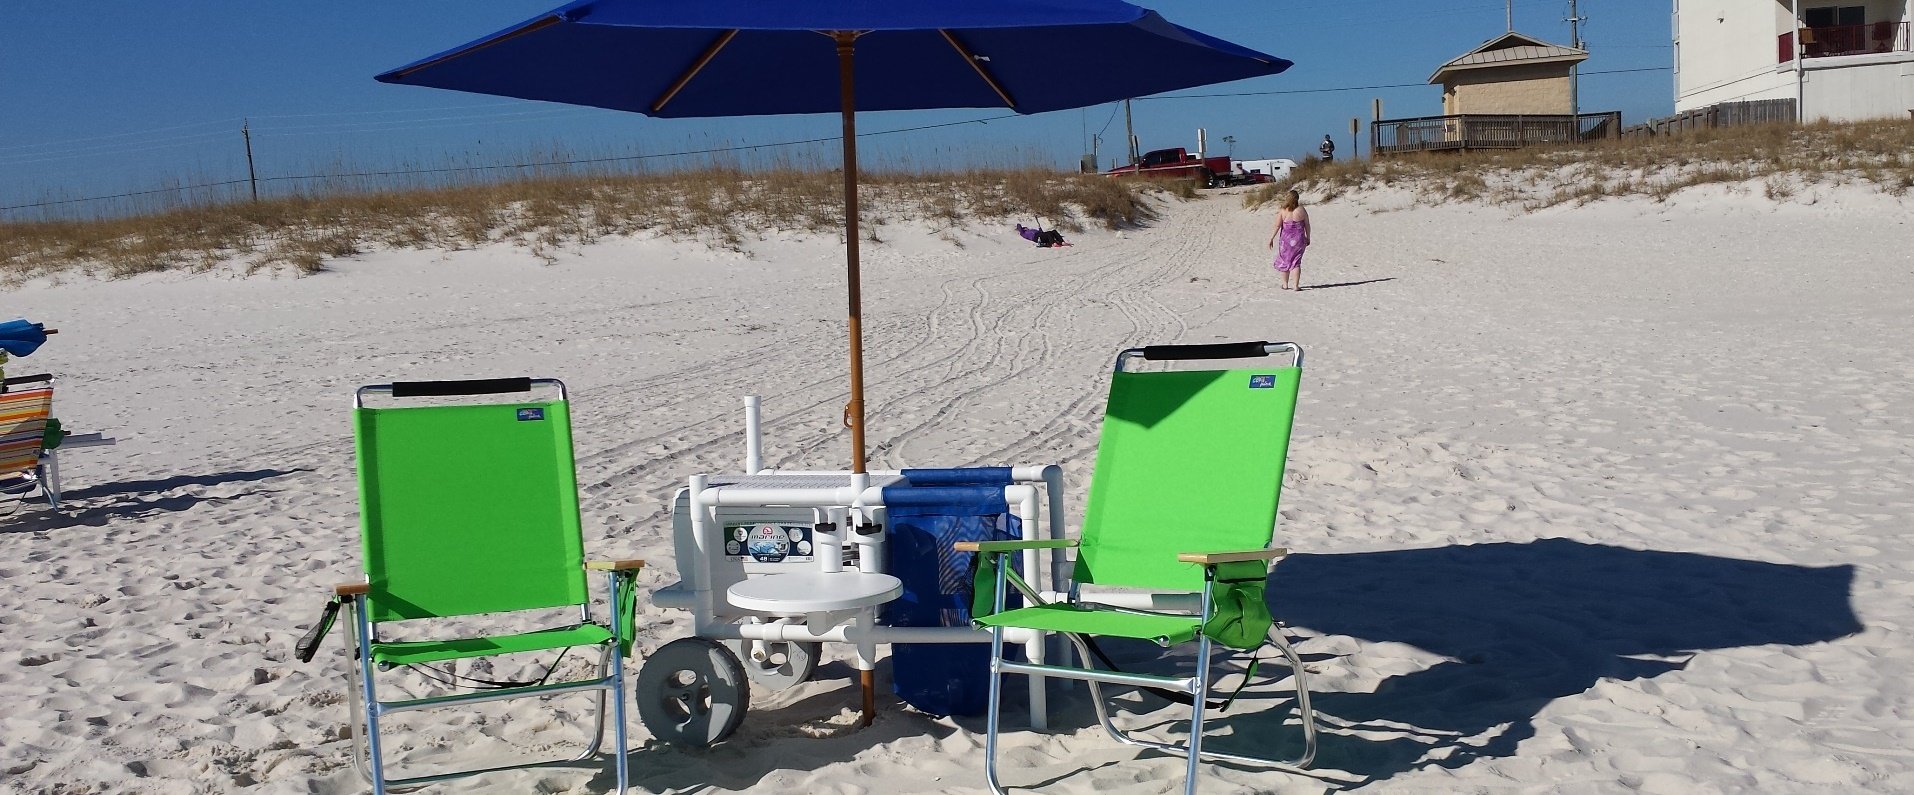 Perdido Key Beach Chairs and Cart Rentals  3  Copy